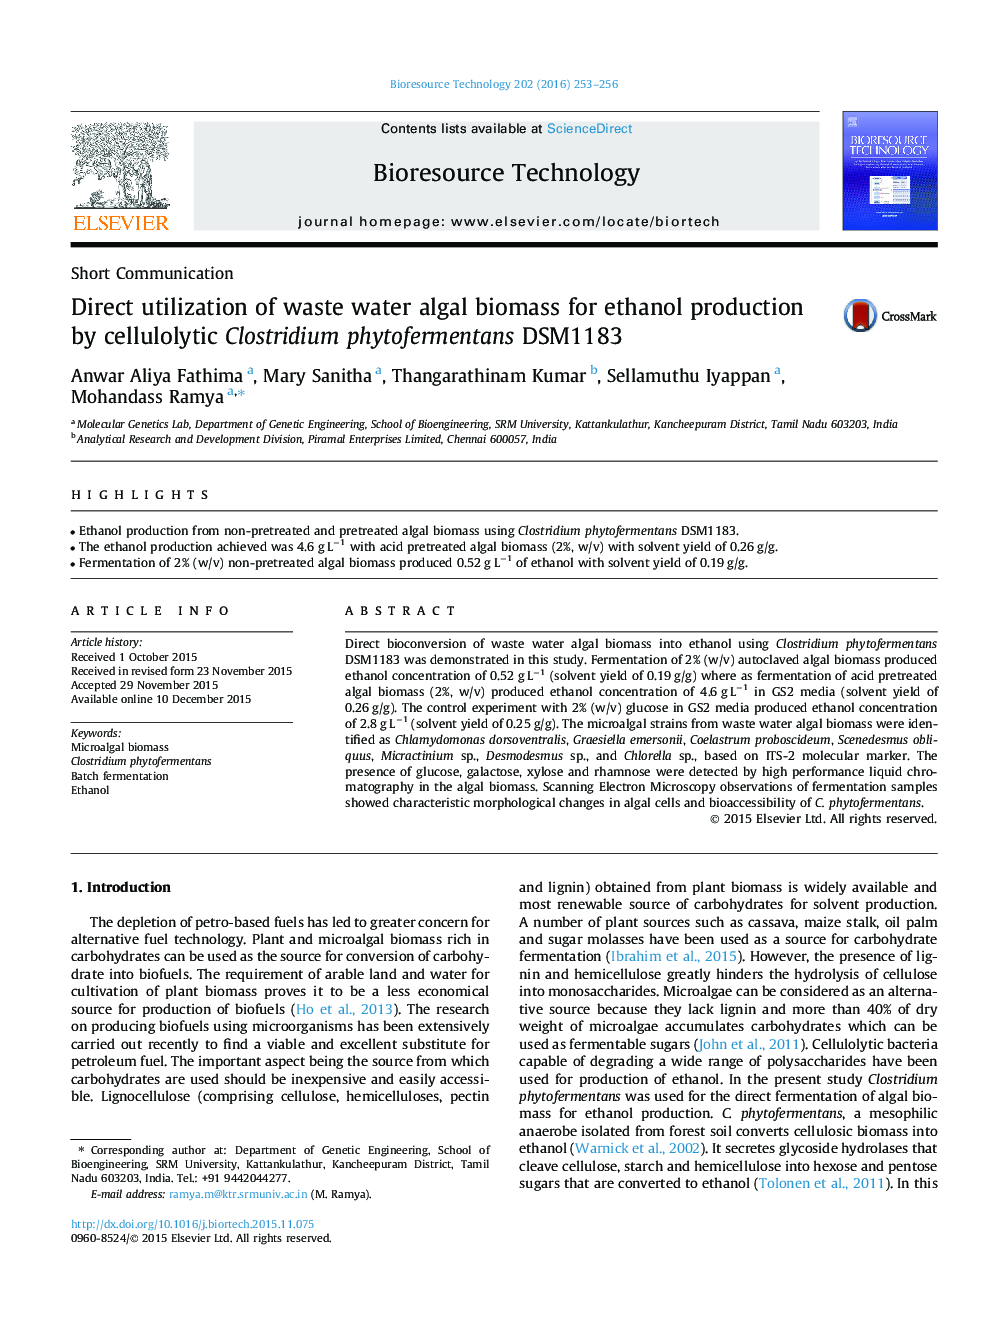 Direct utilization of waste water algal biomass for ethanol production by cellulolytic Clostridium phytofermentans DSM1183